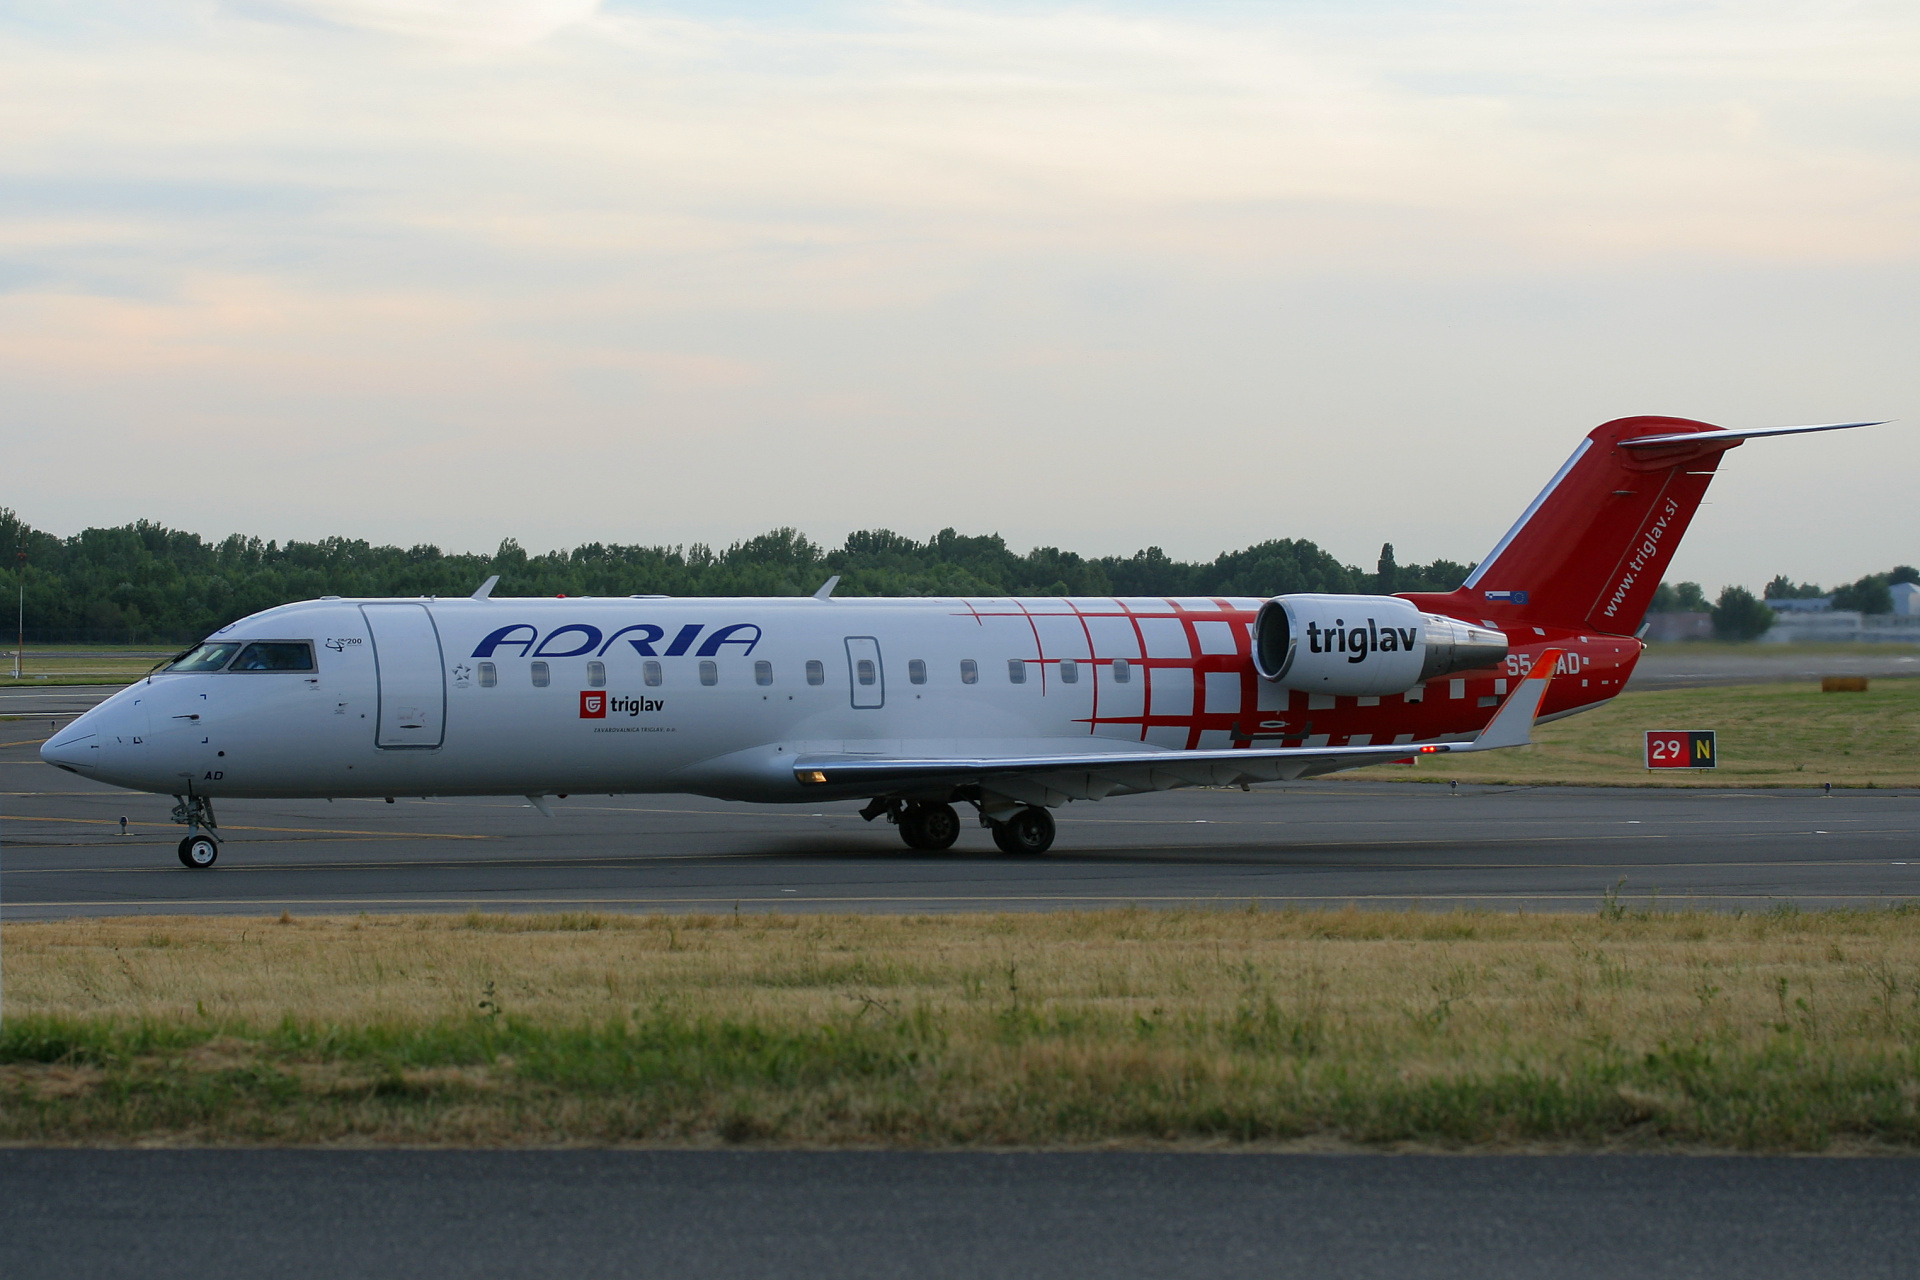 S5-AAD (Triglav livery) (Aircraft » EPWA Spotting » Bombardier CL-600 Regional Jet » CRJ-200 » Adria Airways)